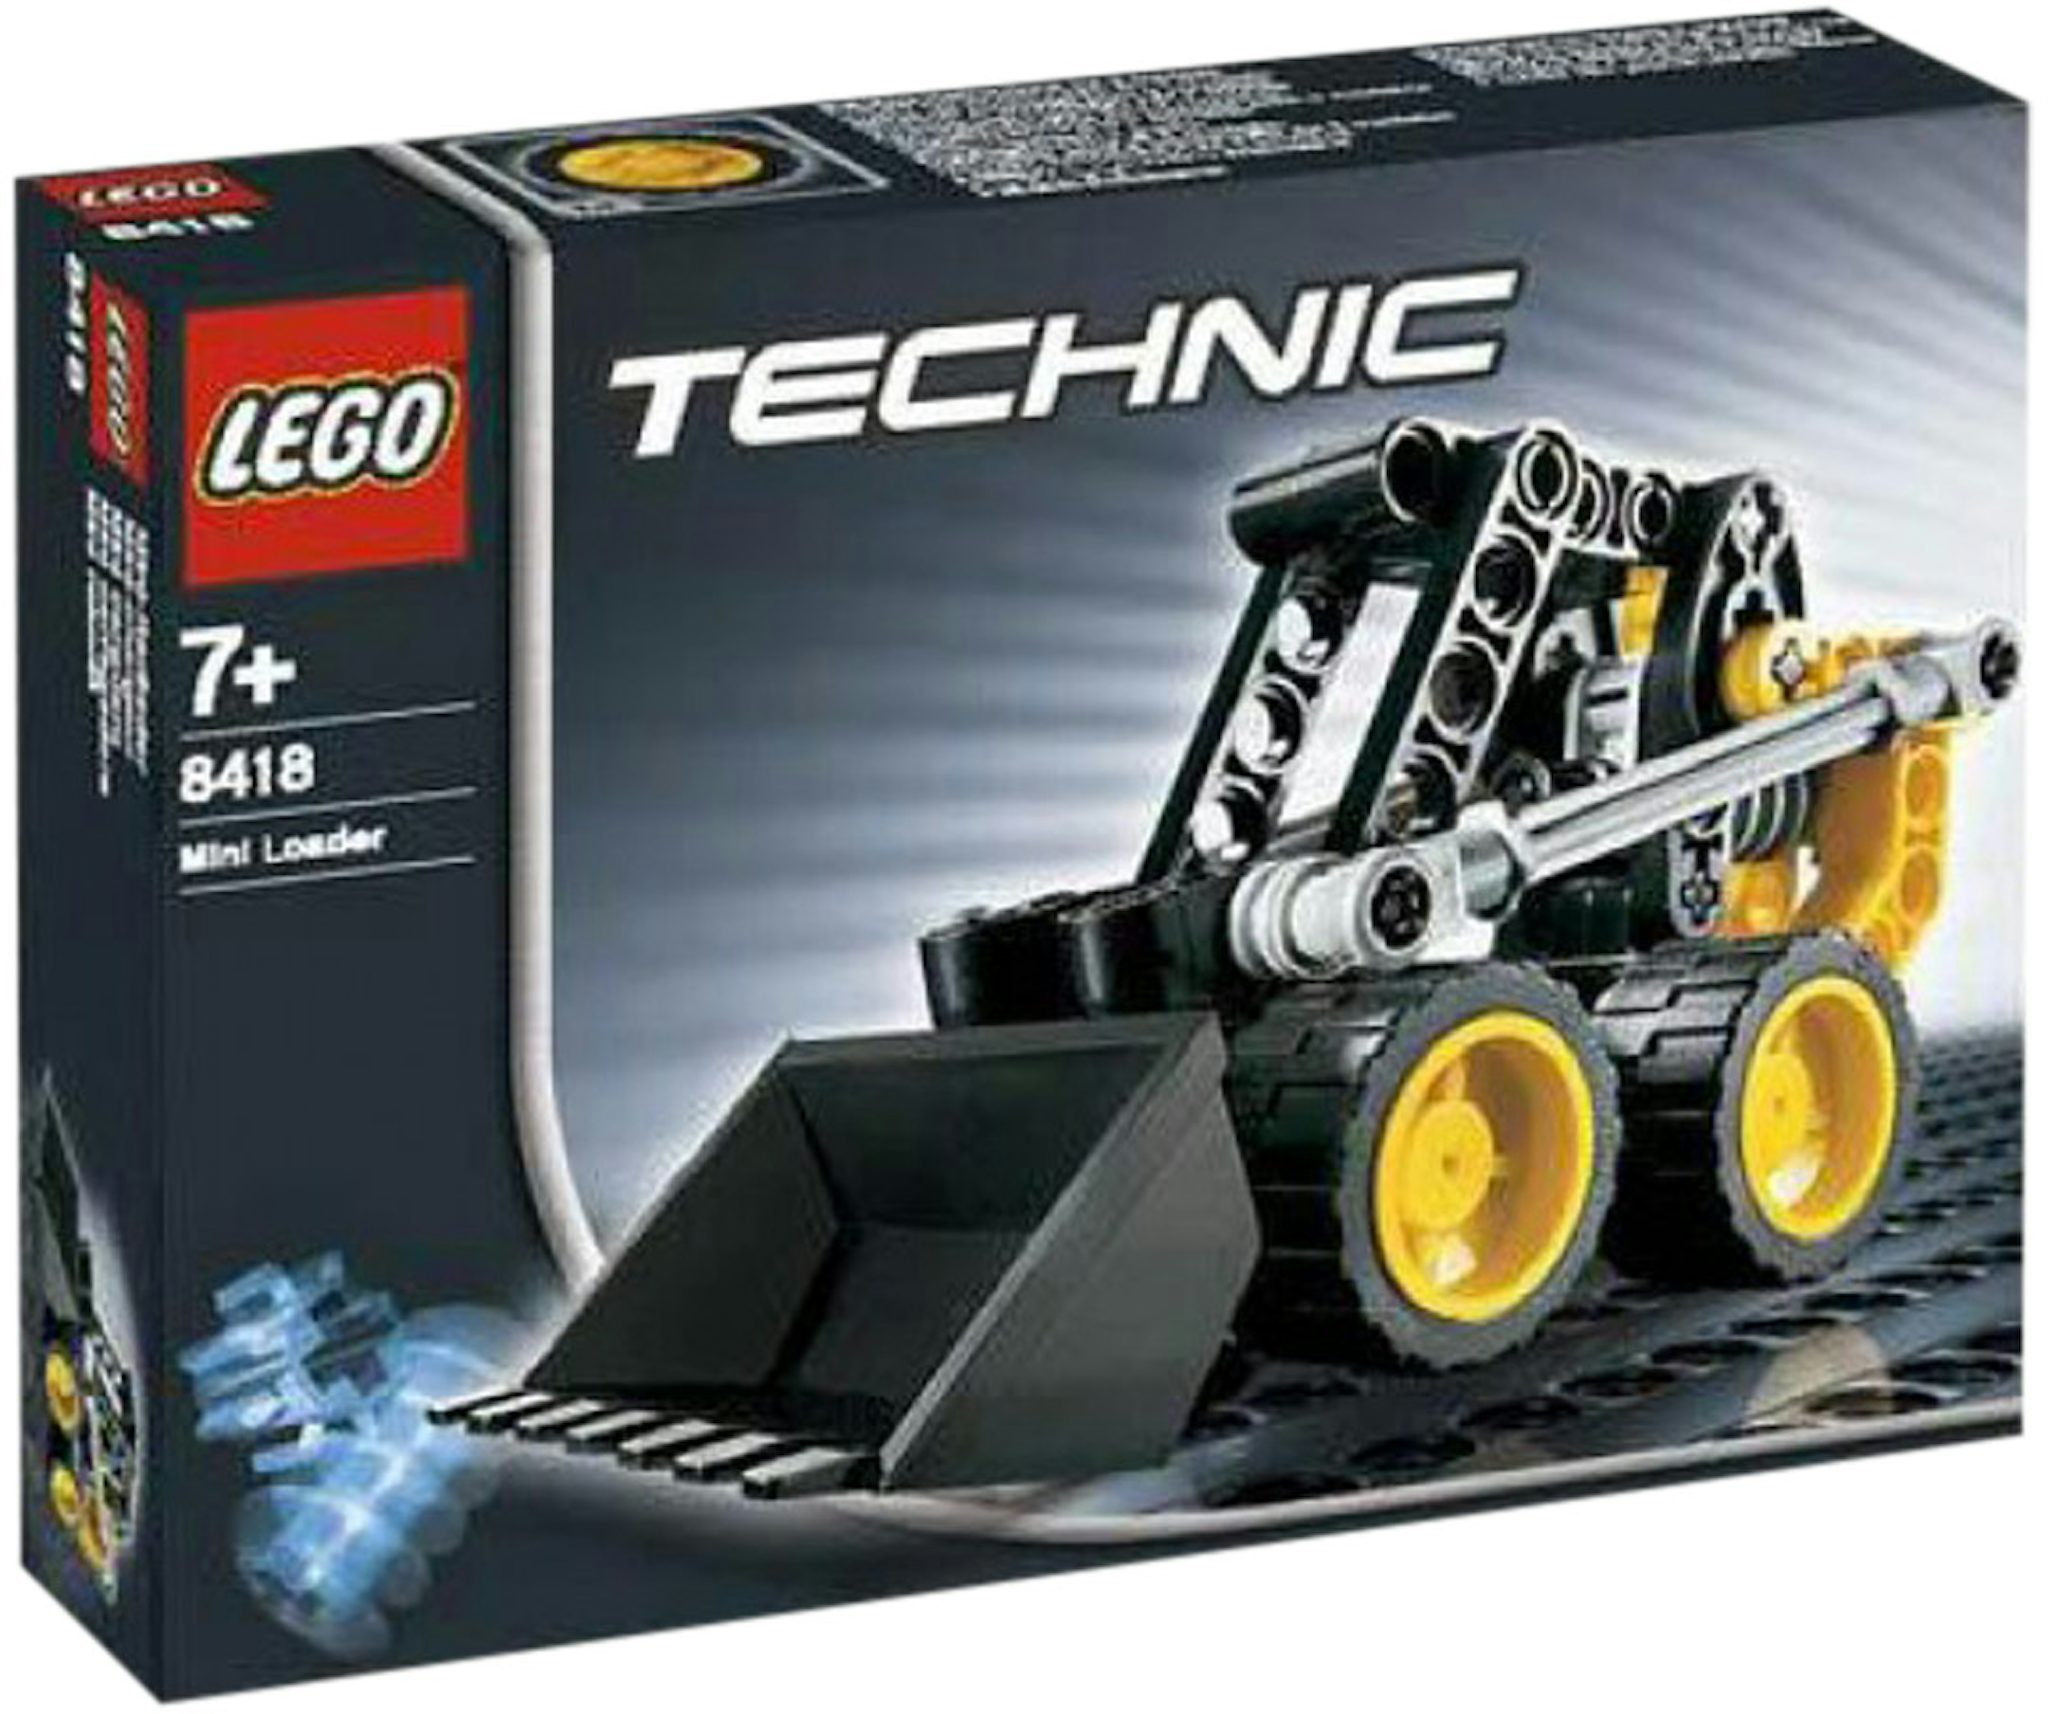 LEGO Technic Mini Loader Set 8418 - US